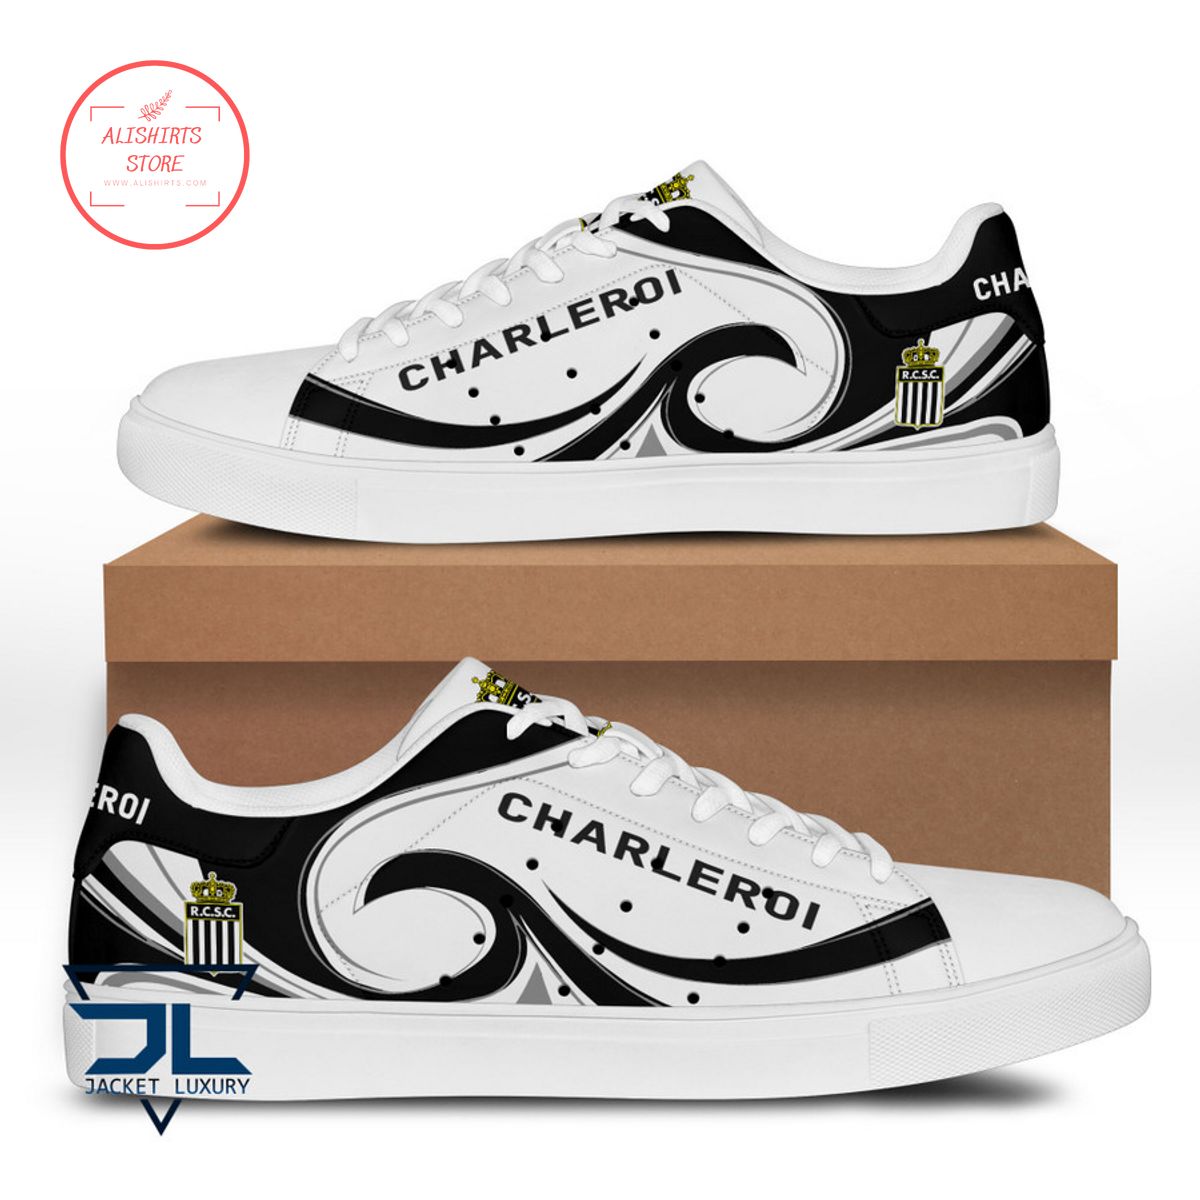 R. Charleroi S.C Stan Smith Shoes